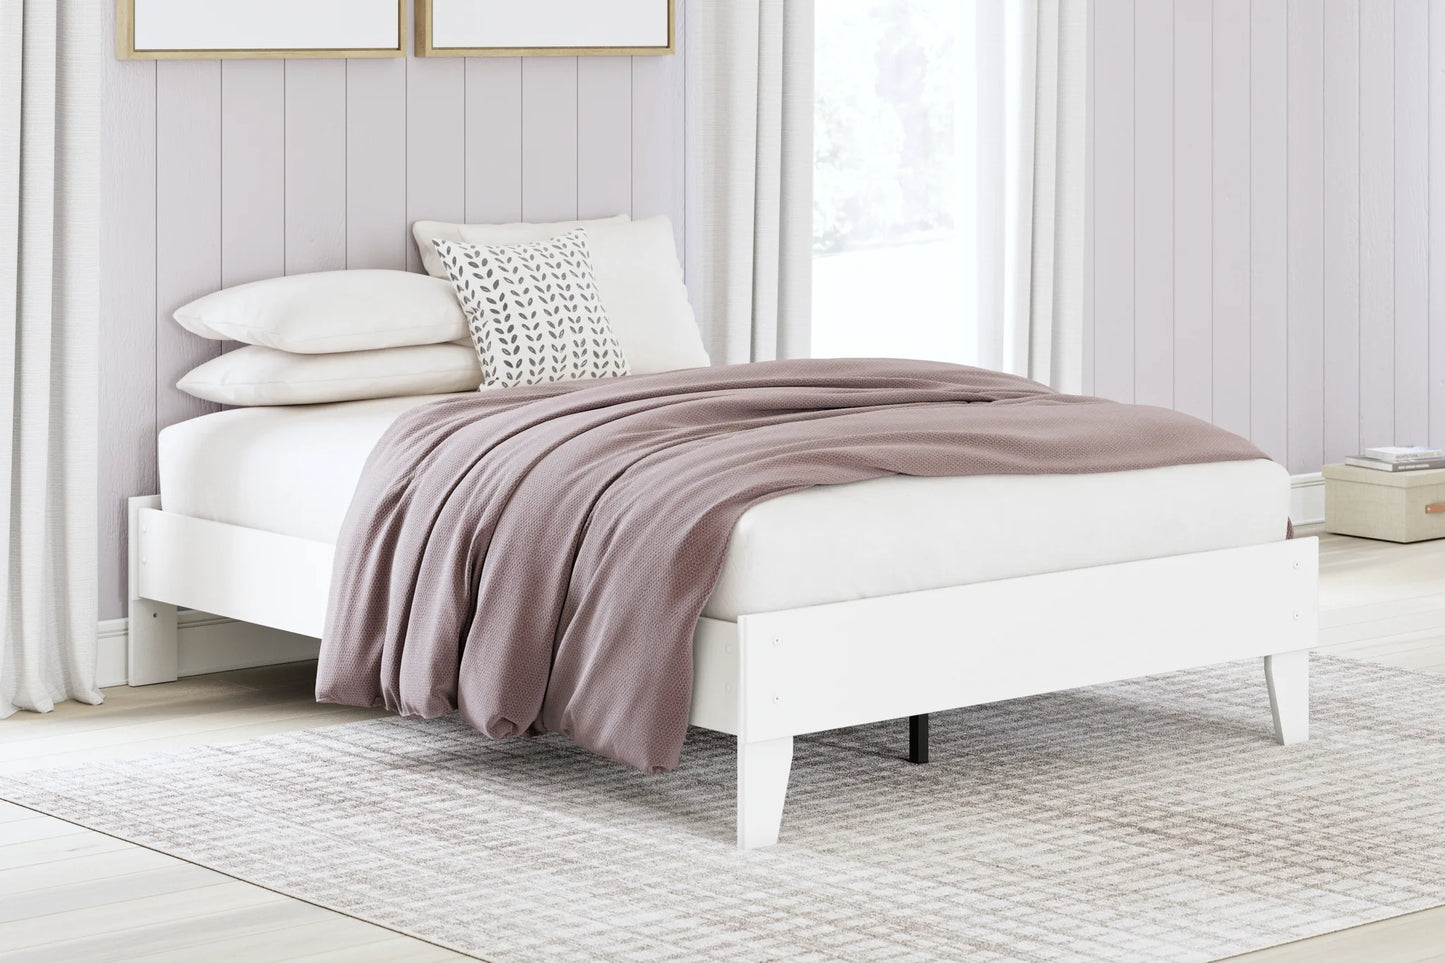 Hallityn - White - Full Platform Bed